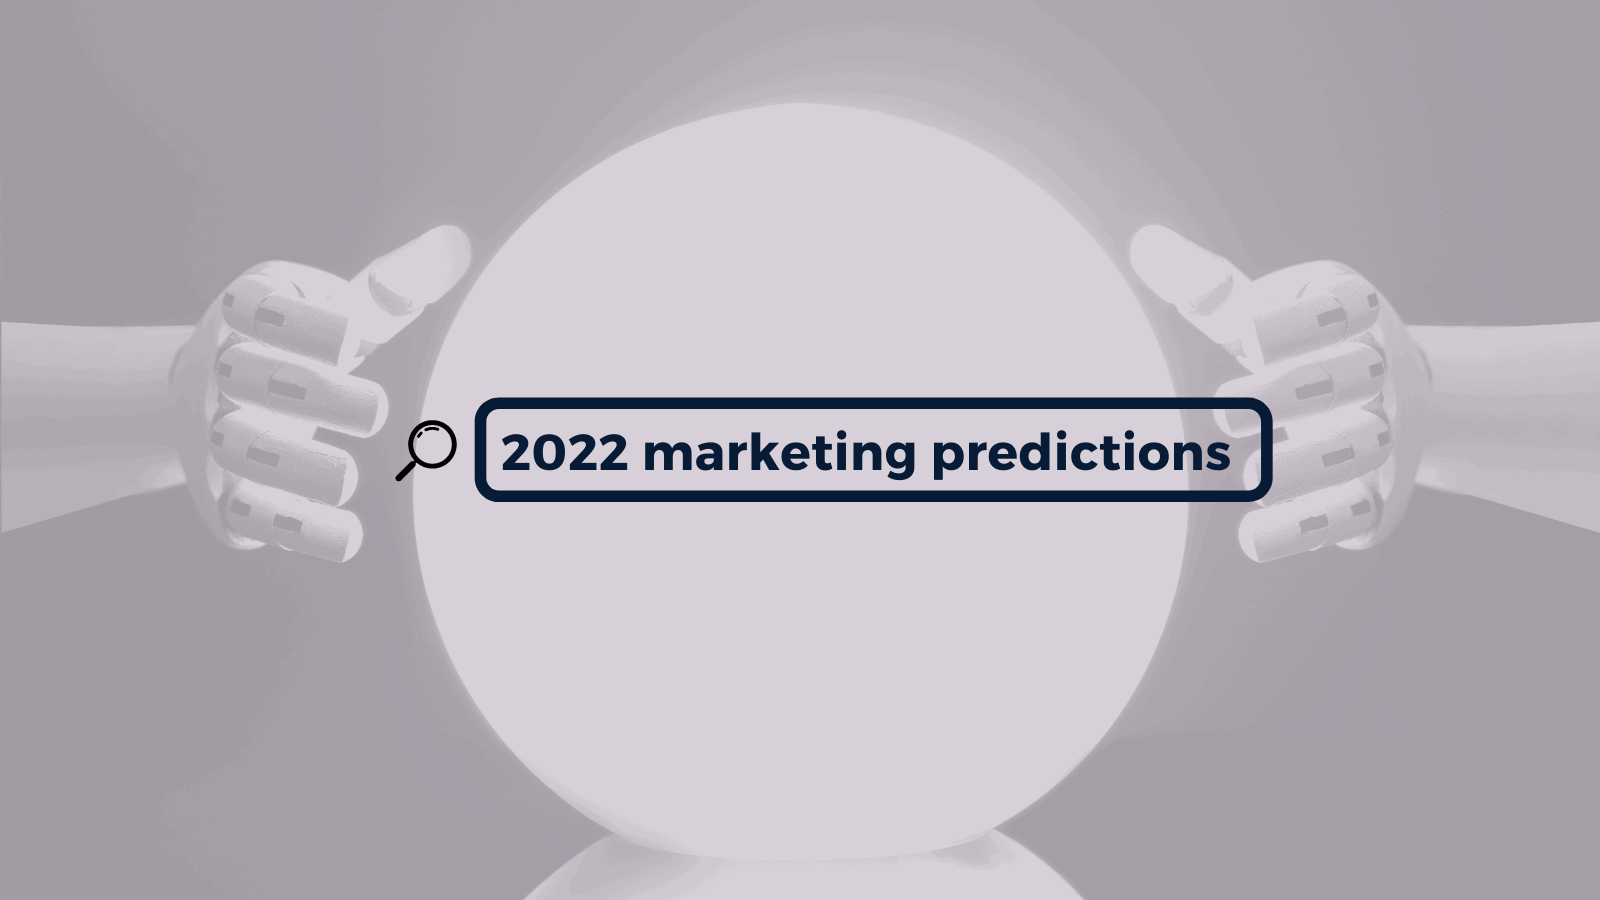 7 B2B & B2G marketing predictions for 2022